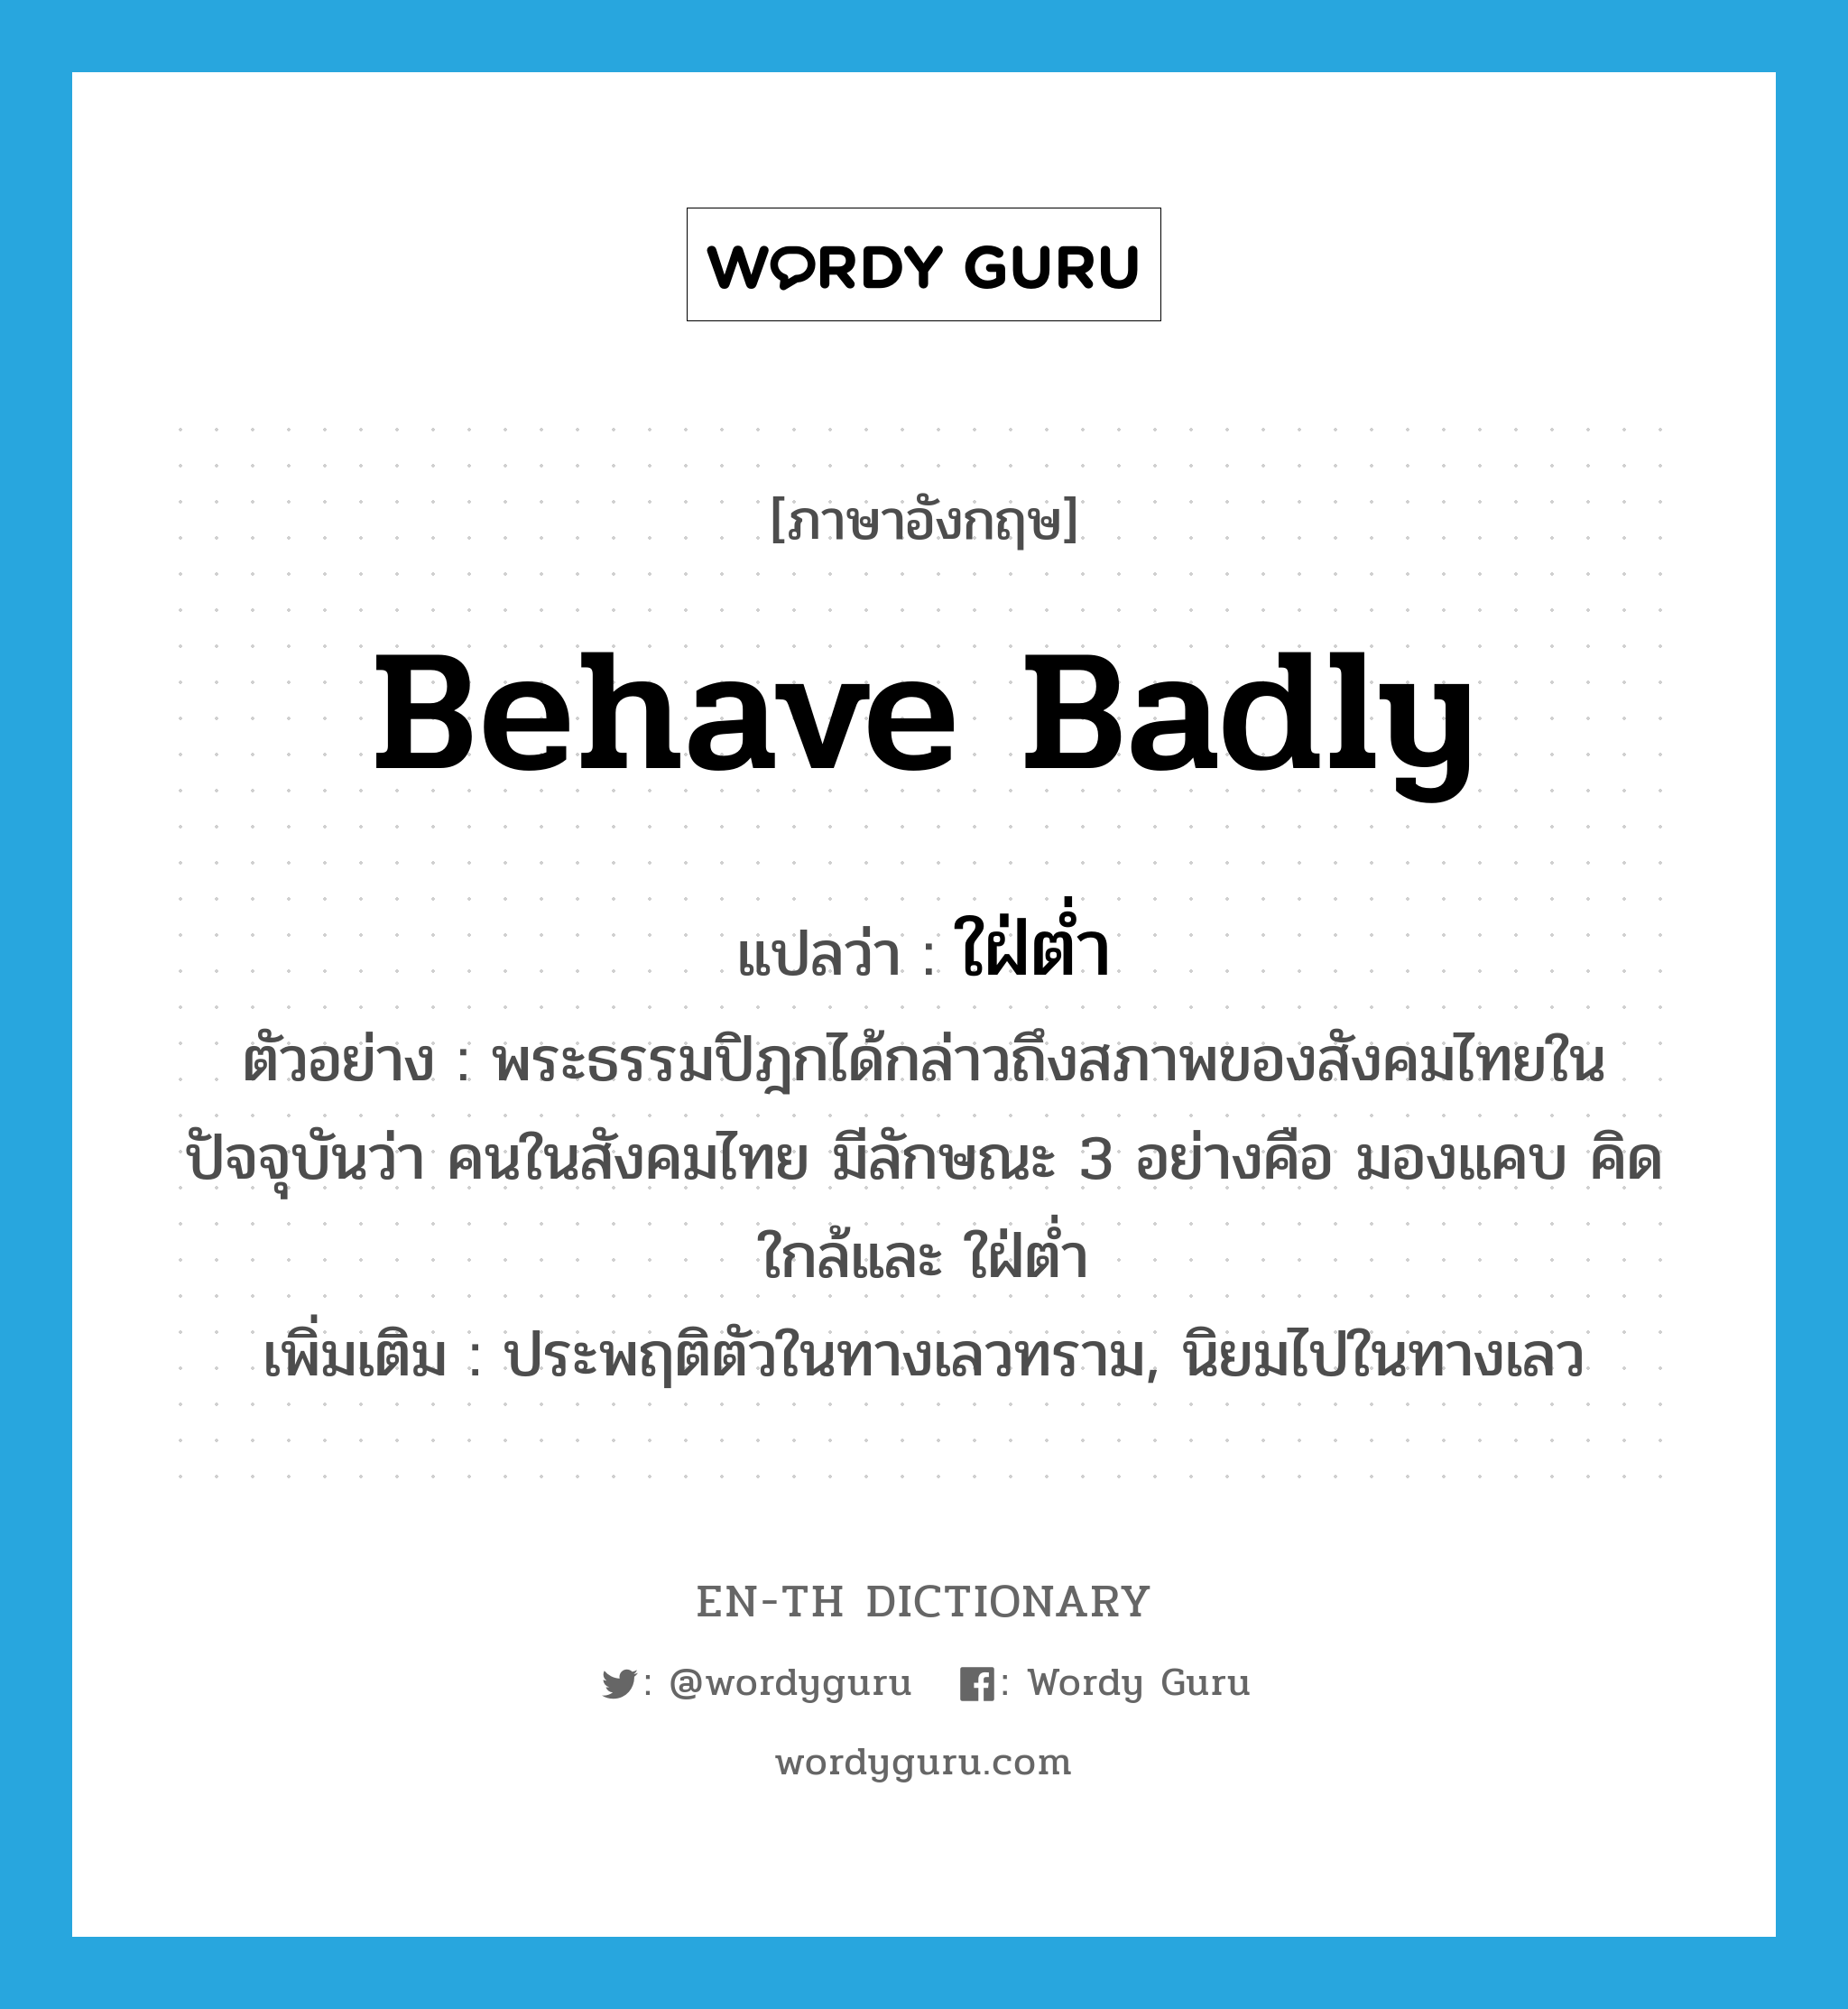 behave badly แปลว่า?, คำศัพท์ภาษาอังกฤษ behave badly แปลว่า ใฝ่ต่ำ ประเภท V ตัวอย่าง พระธรรมปิฎกได้กล่าวถึงสภาพของสังคมไทยในปัจจุบันว่า คนในสังคมไทย มีลักษณะ 3 อย่างคือ มองแคบ คิดใกล้และ ใฝ่ต่ำ เพิ่มเติม ประพฤติตัวในทางเลวทราม, นิยมไปในทางเลว หมวด V